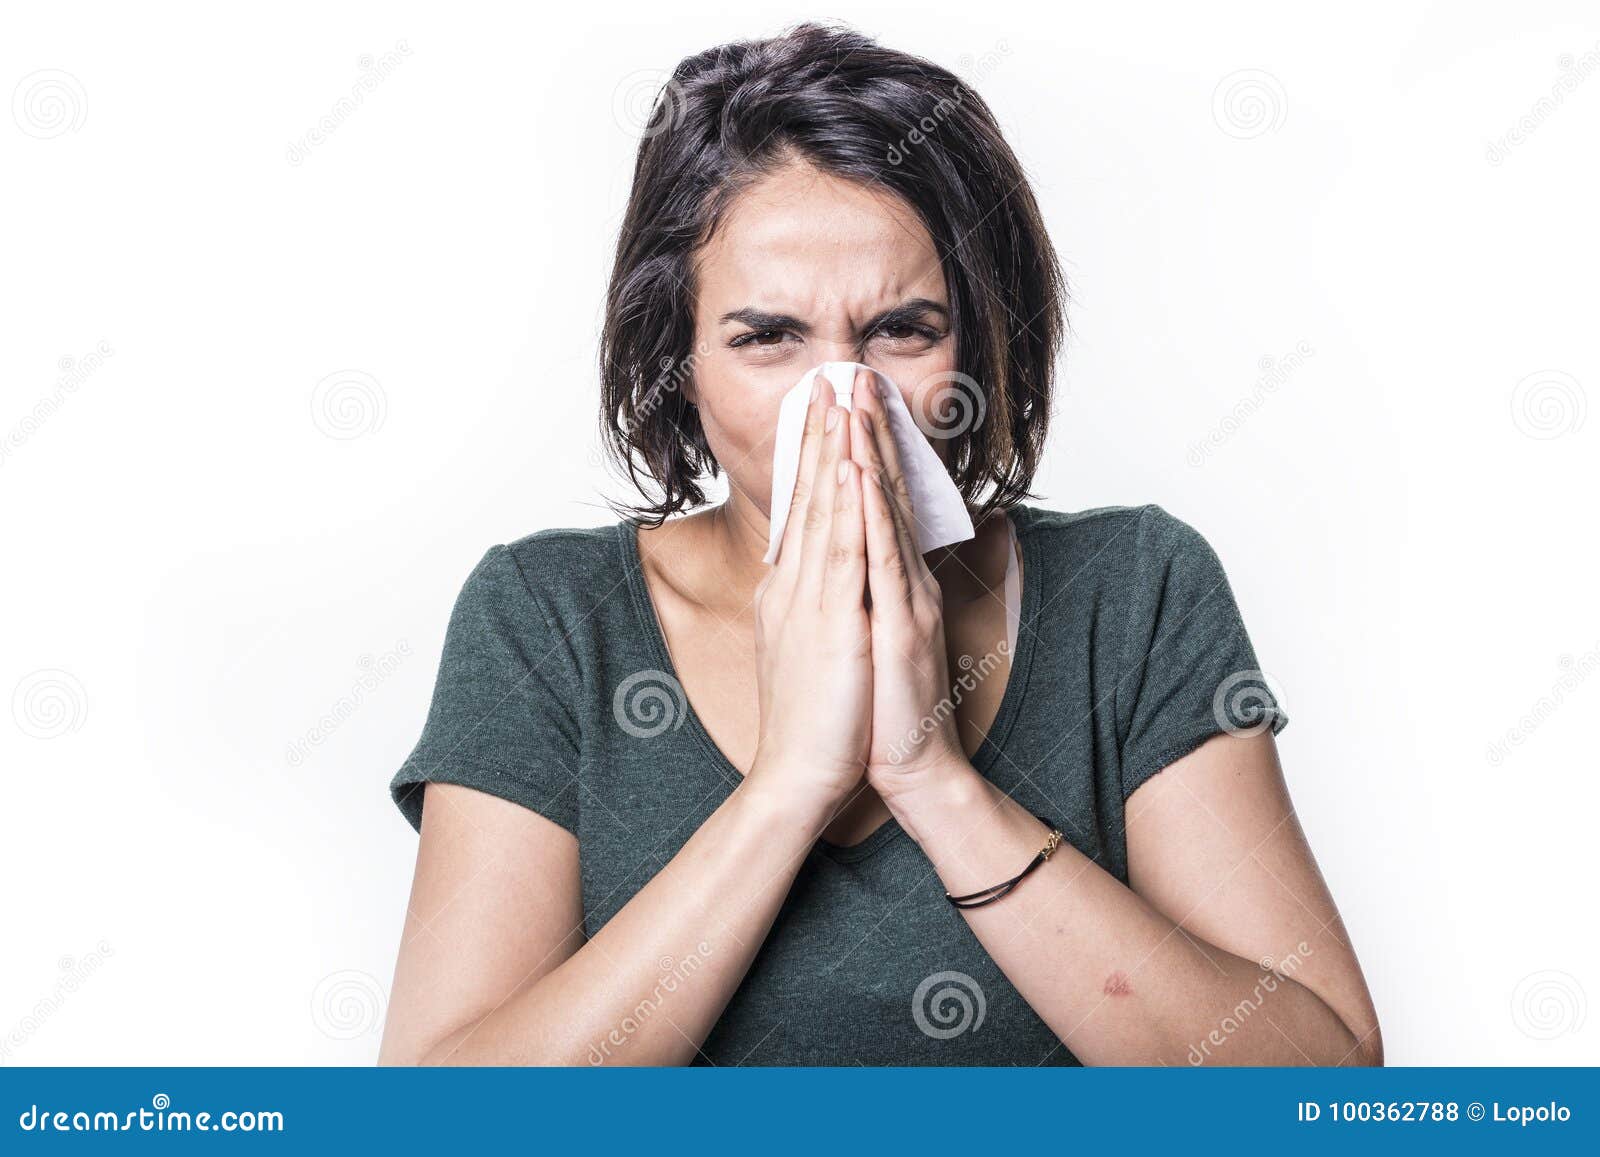 sneeze girl having flu on white studo background